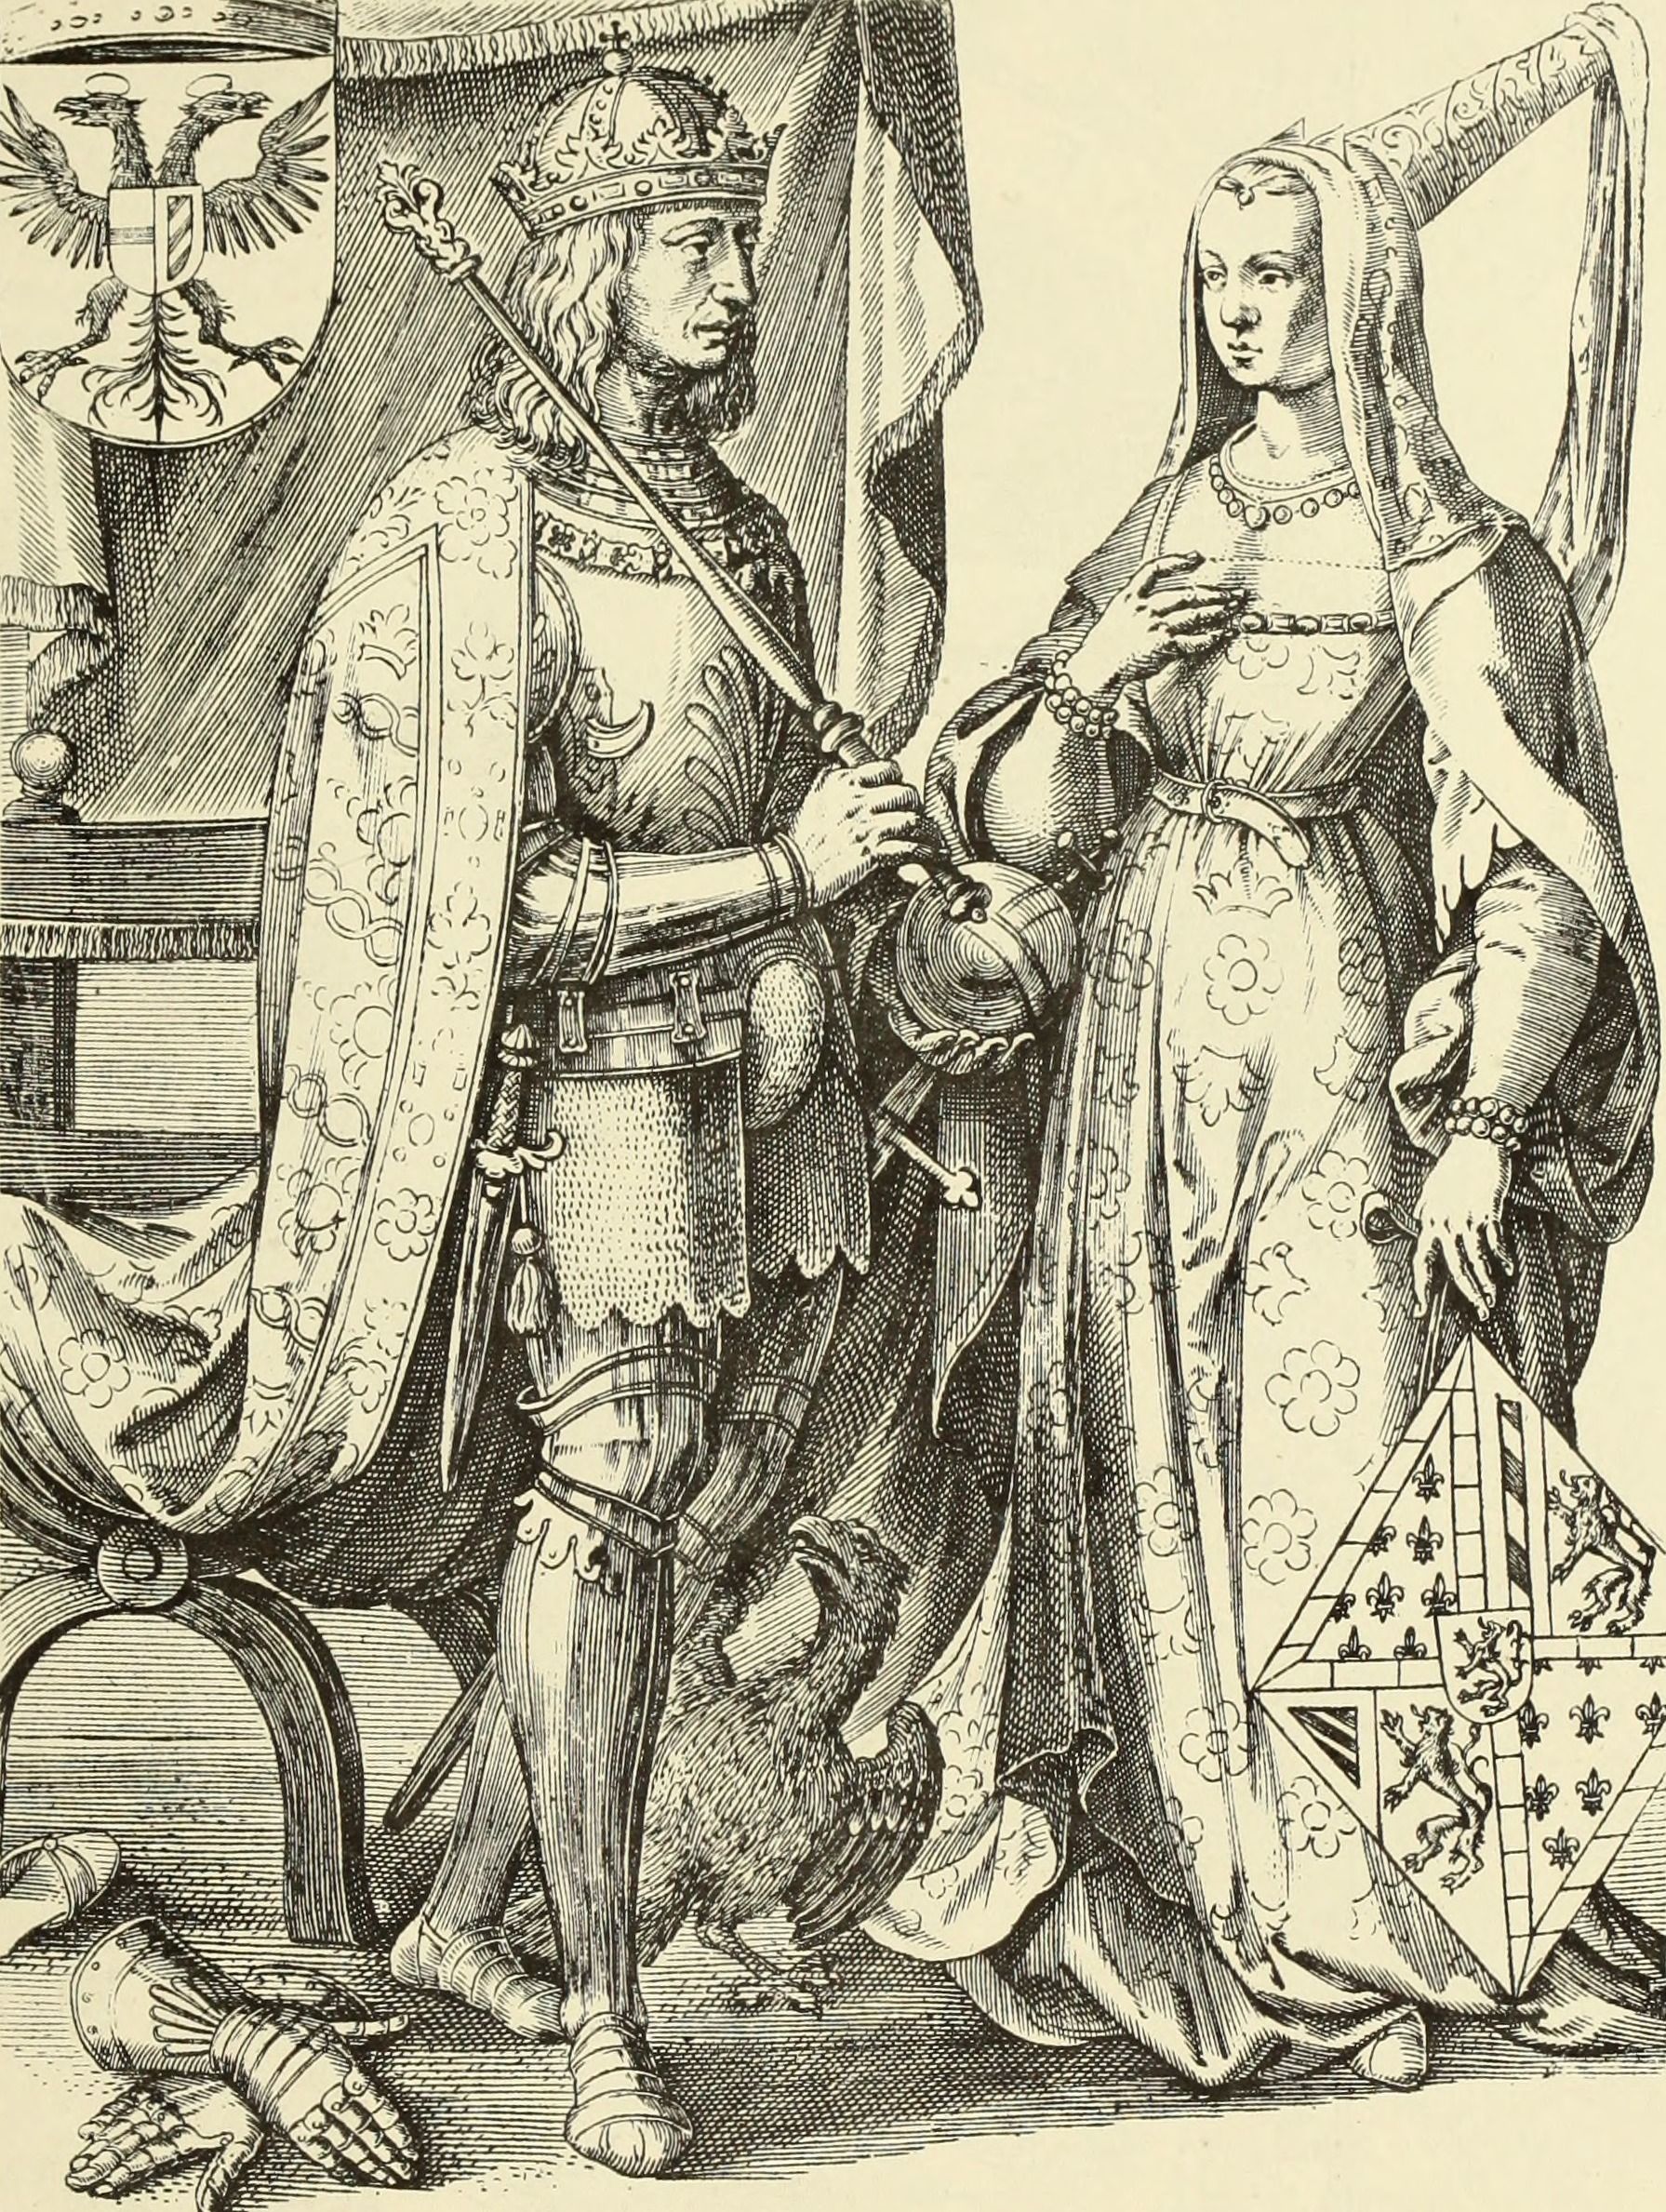 Maksymilian Habsburg i Maria Burgundzka na litografii z publikacji braci Hymans "Bruxelles à travers les âges" z 1884 roku.